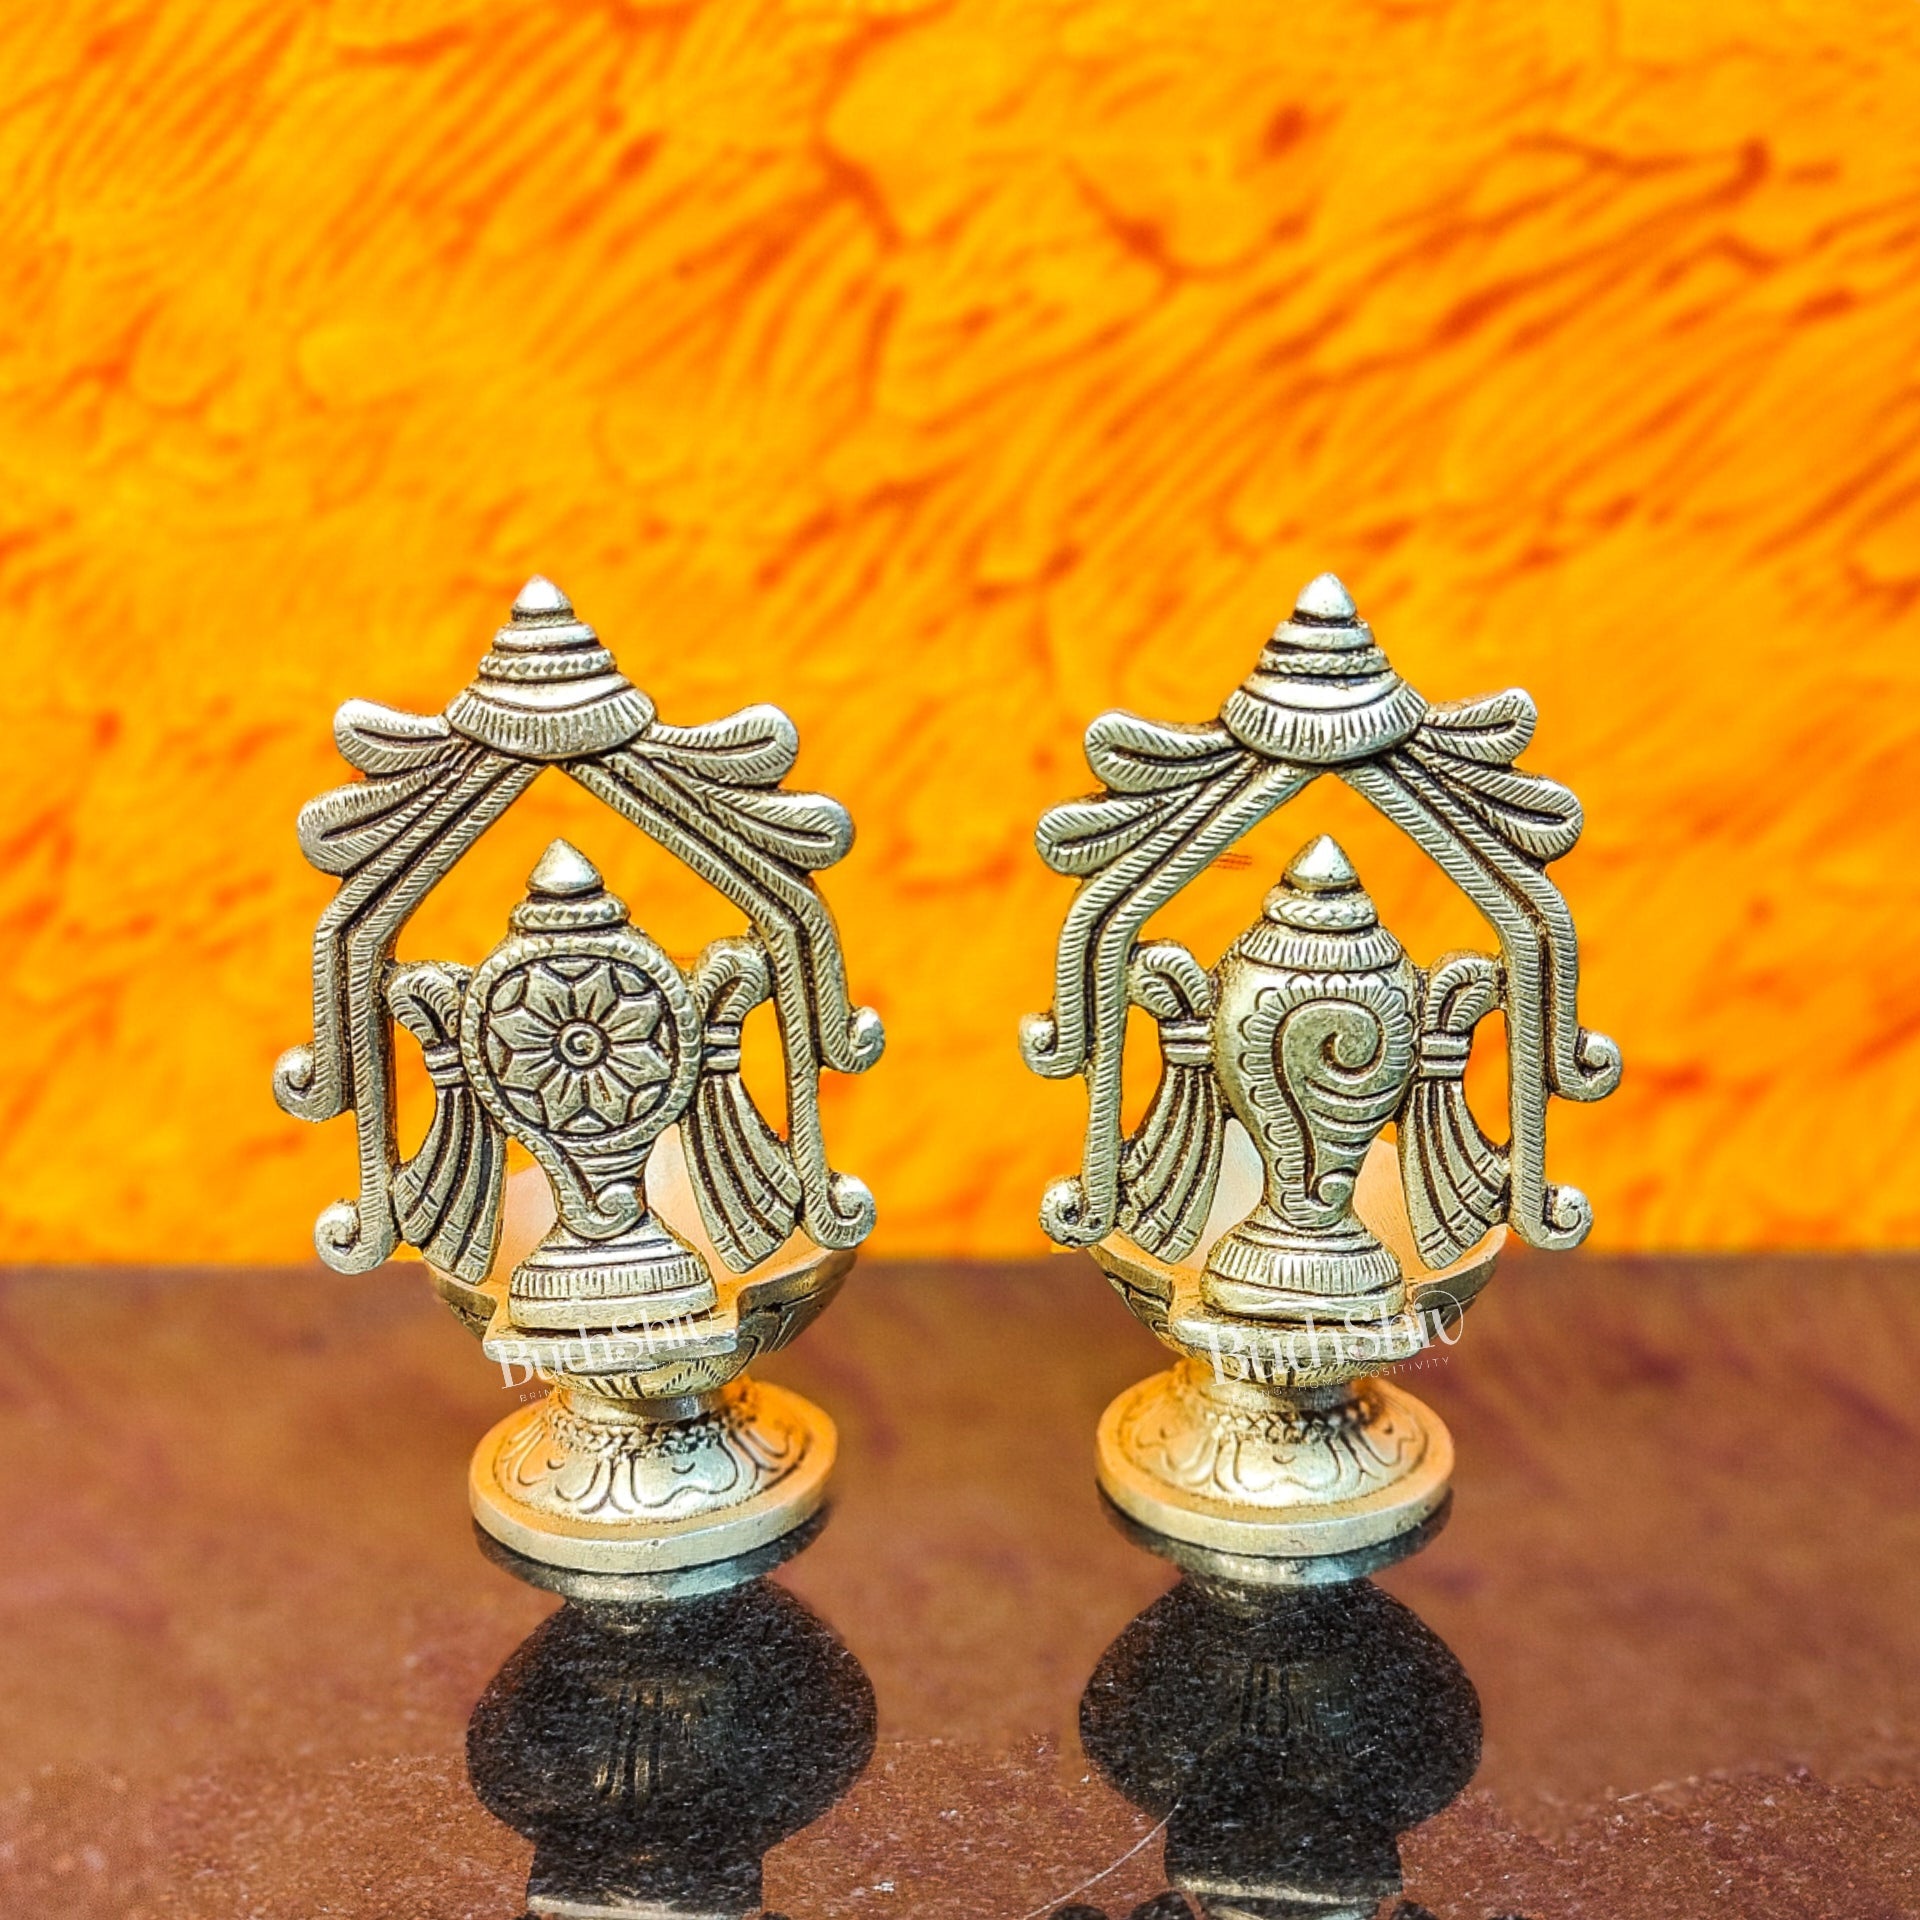 Brass Superfine Shankh Chakra Diya 4.5" - Budhshiv.com